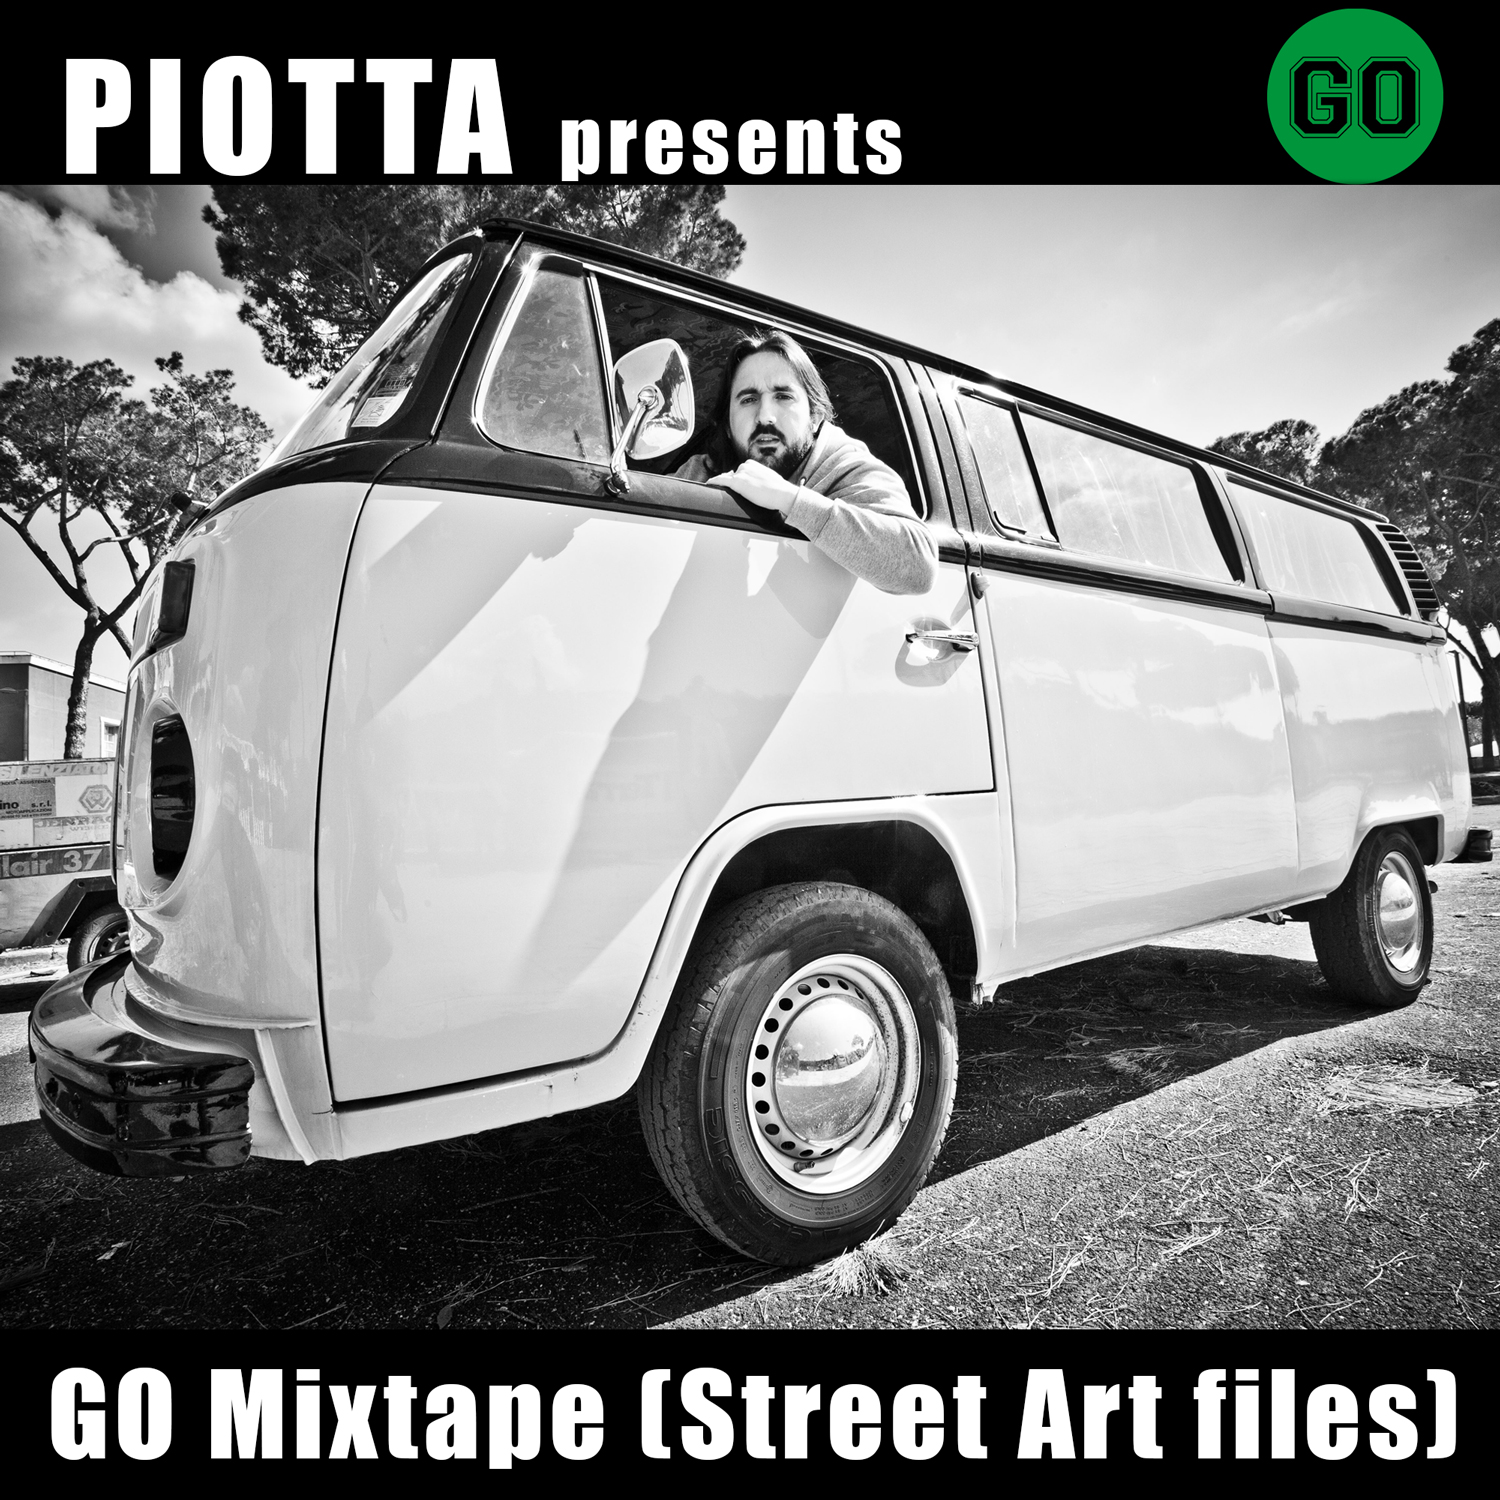 PIOTTA PRESENTS GO MIXTAPE (STREET ART FILES)